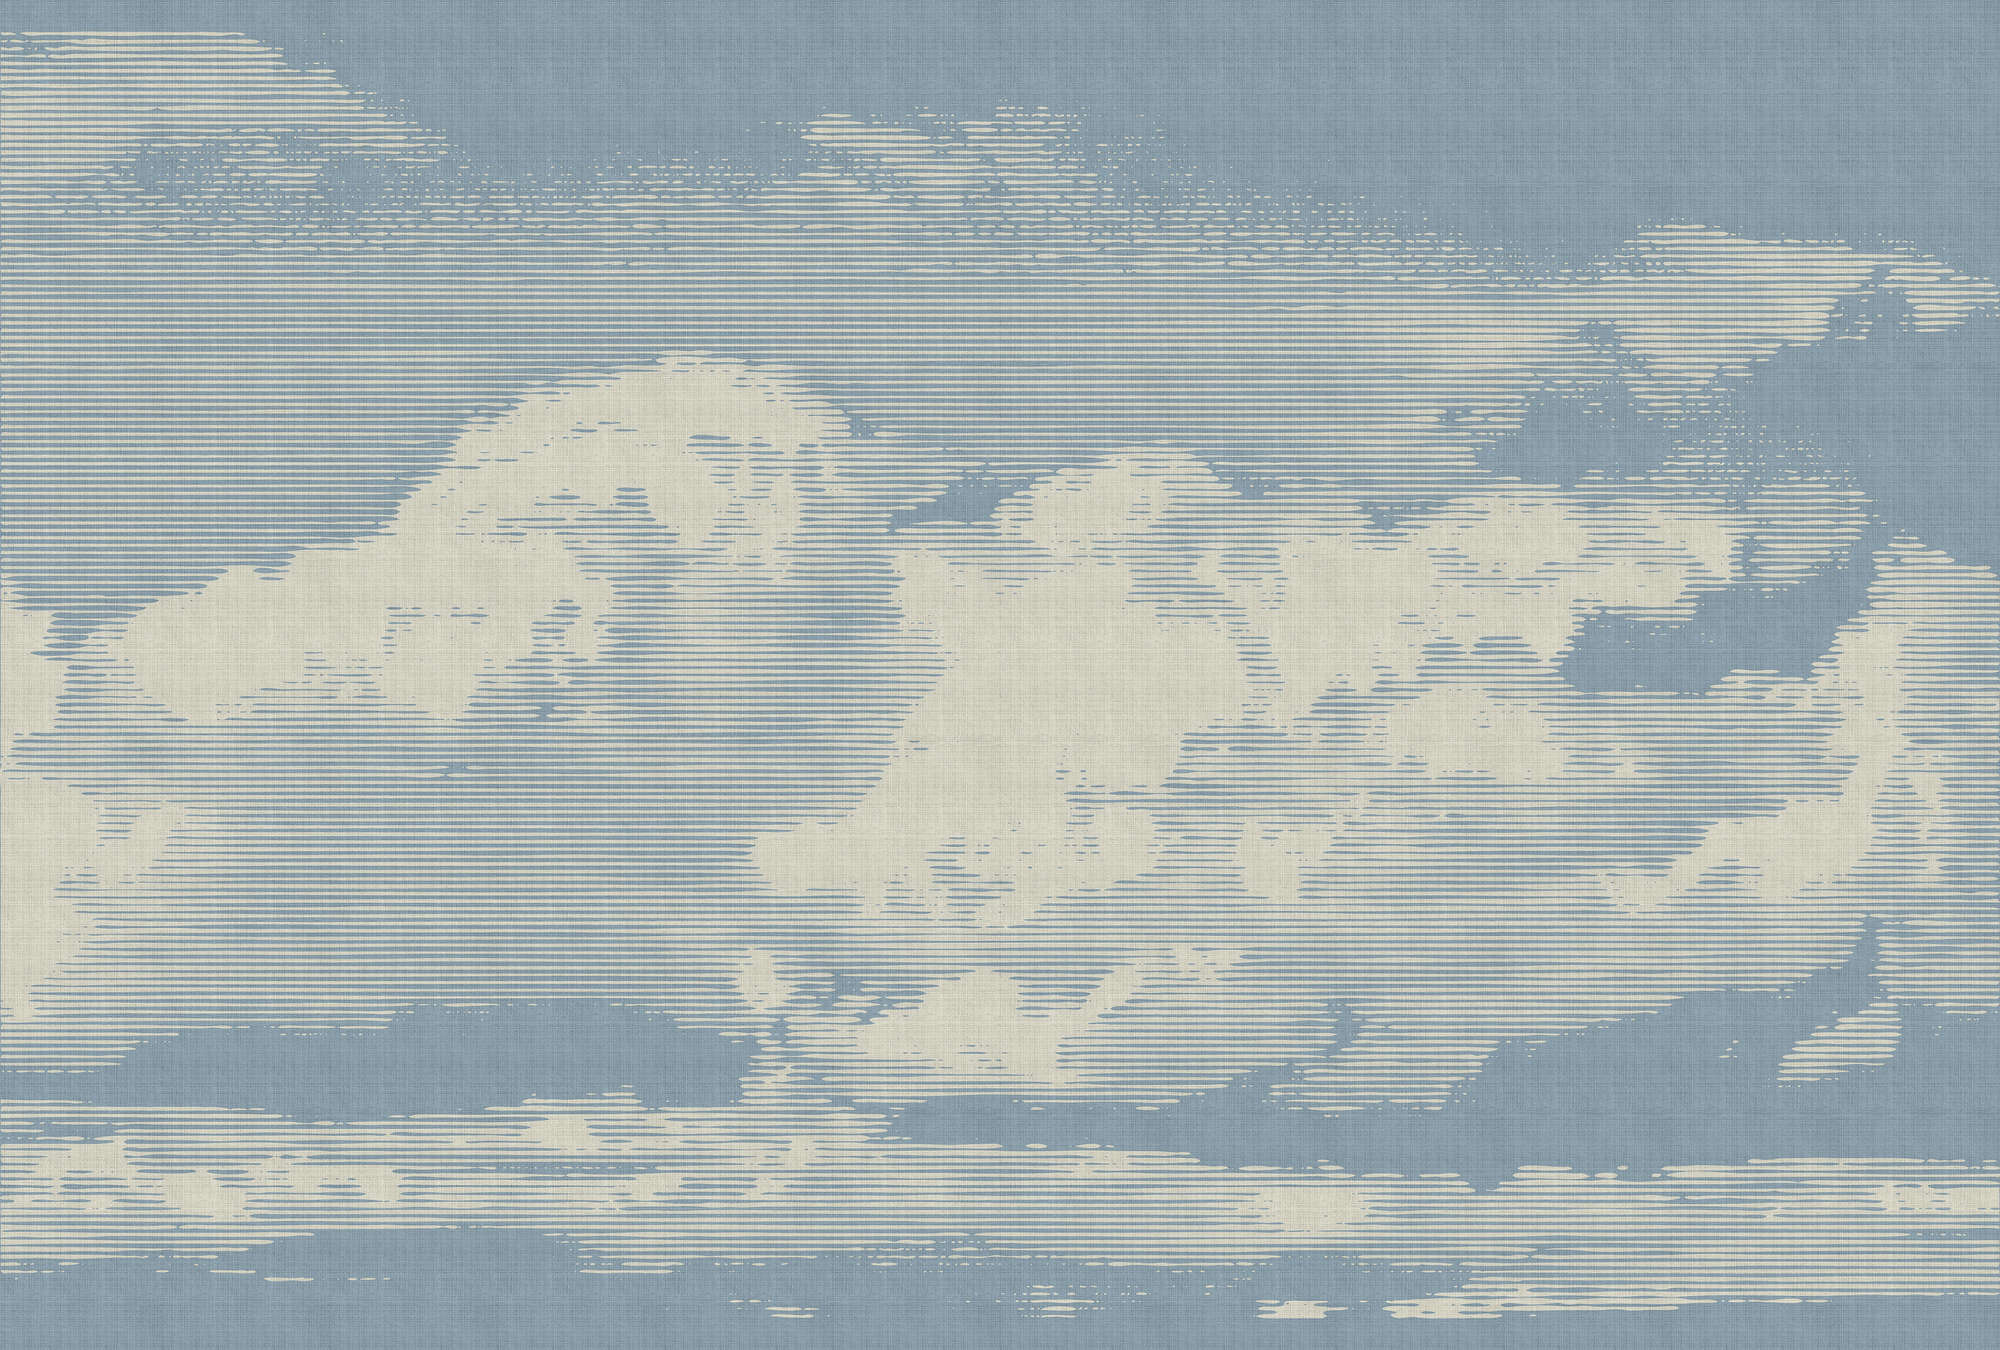             Clouds 1 - Heavenly photo wallpaper with cloud motif in natural linen structure - Beige, Blue | Matt smooth fleece
        